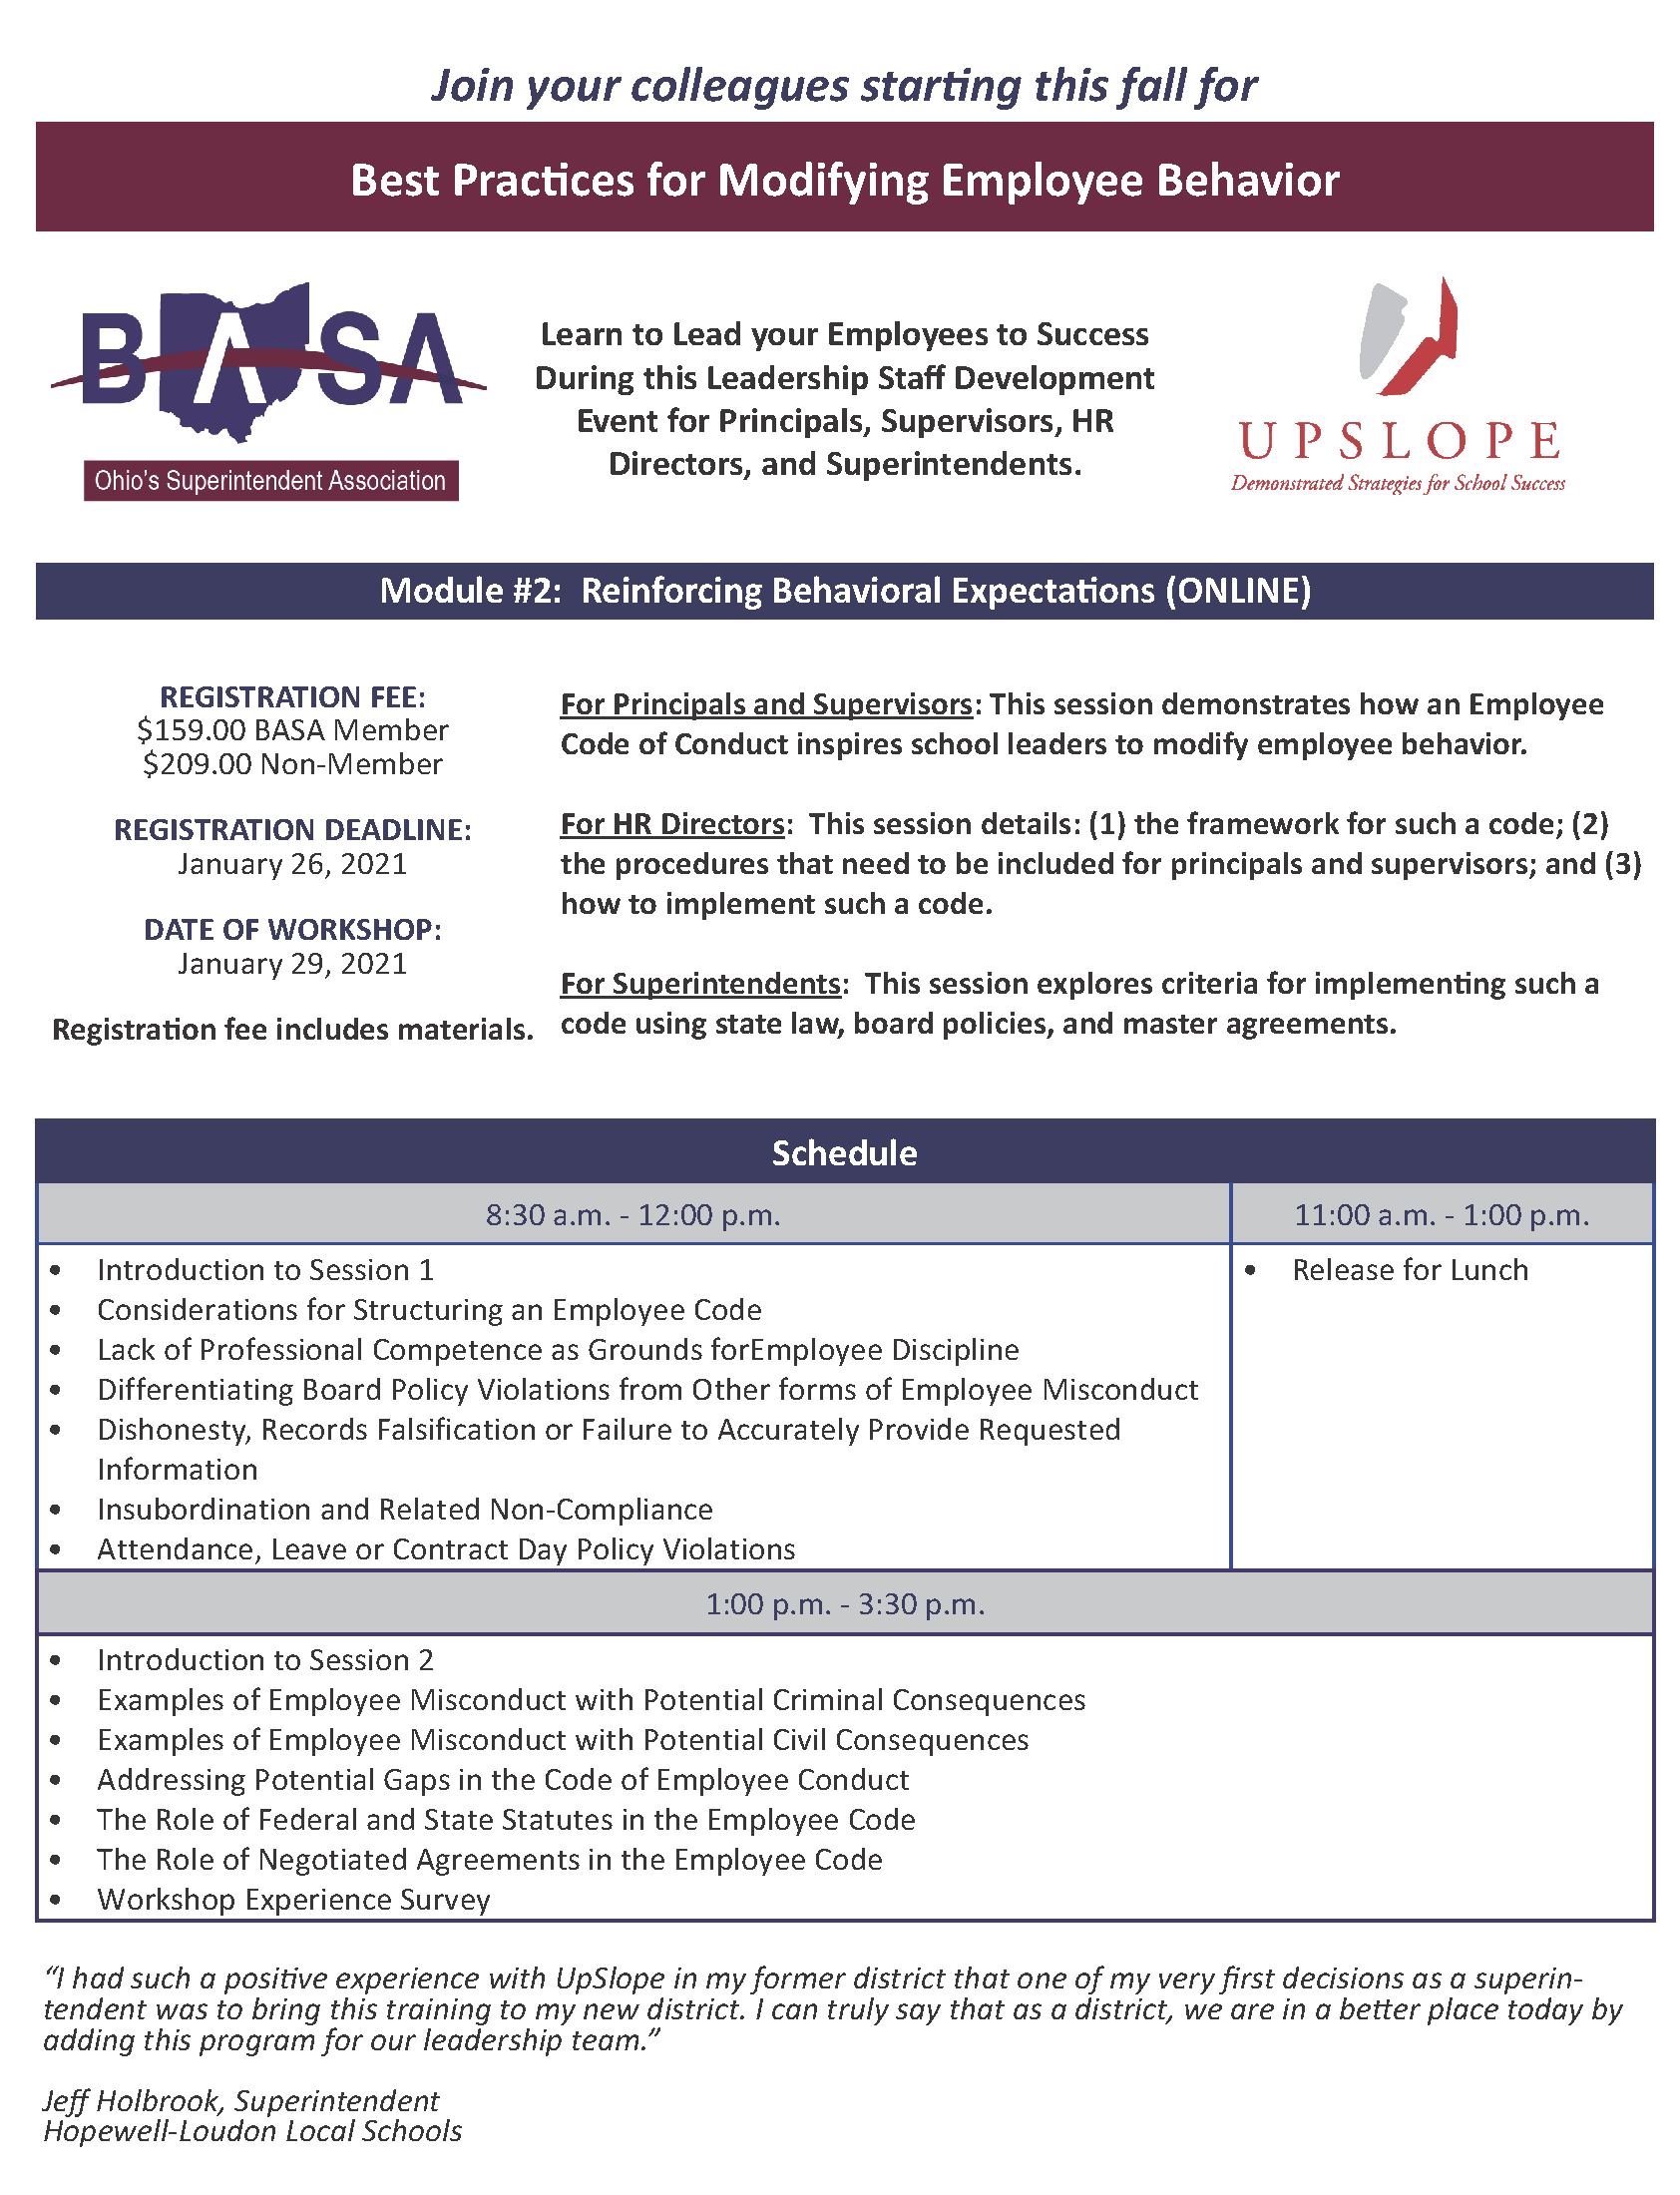 Best Practices for Modifying Employee Behavior @ BASA